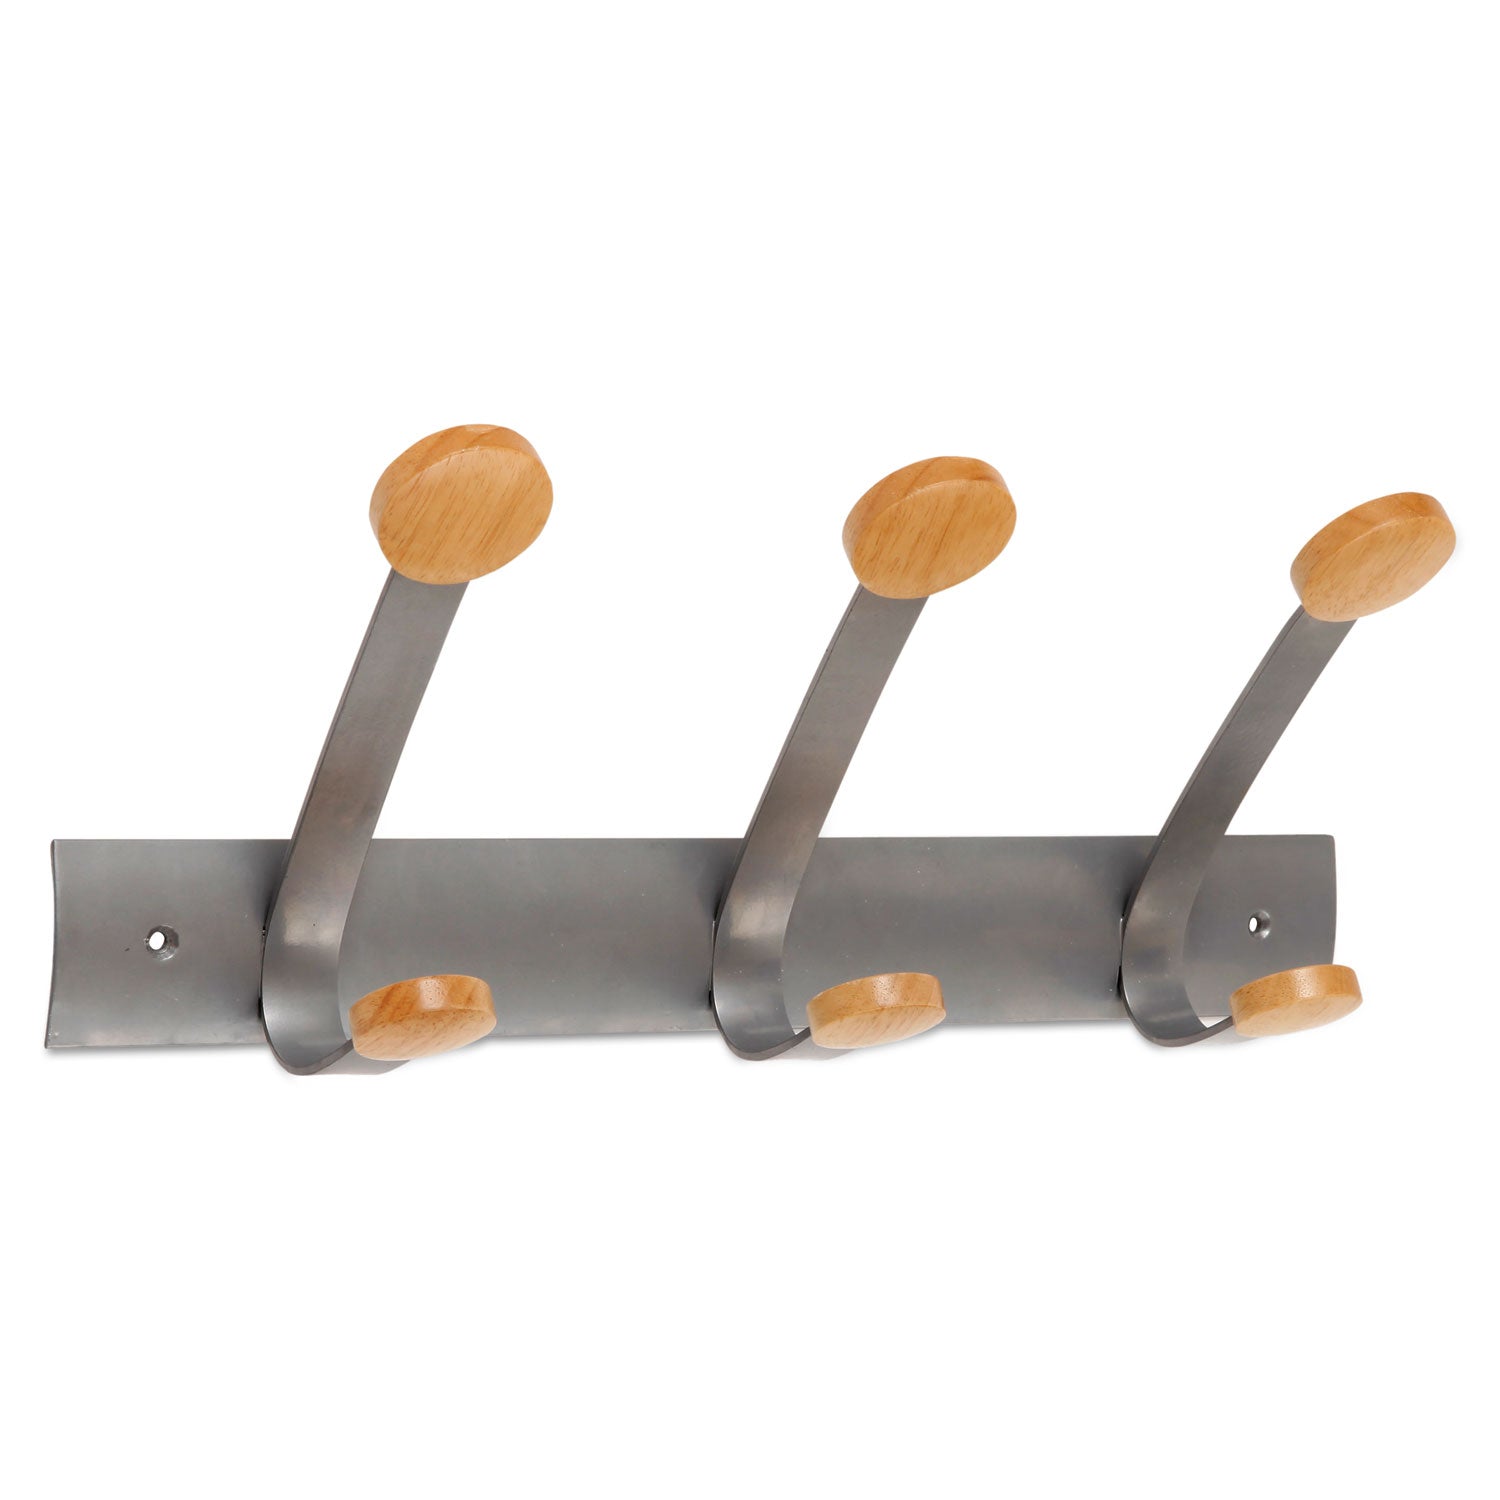 Wooden Coat Hook, Three Wood Peg Wall Rack, Brown/Silver, 45 lb Capacity - 